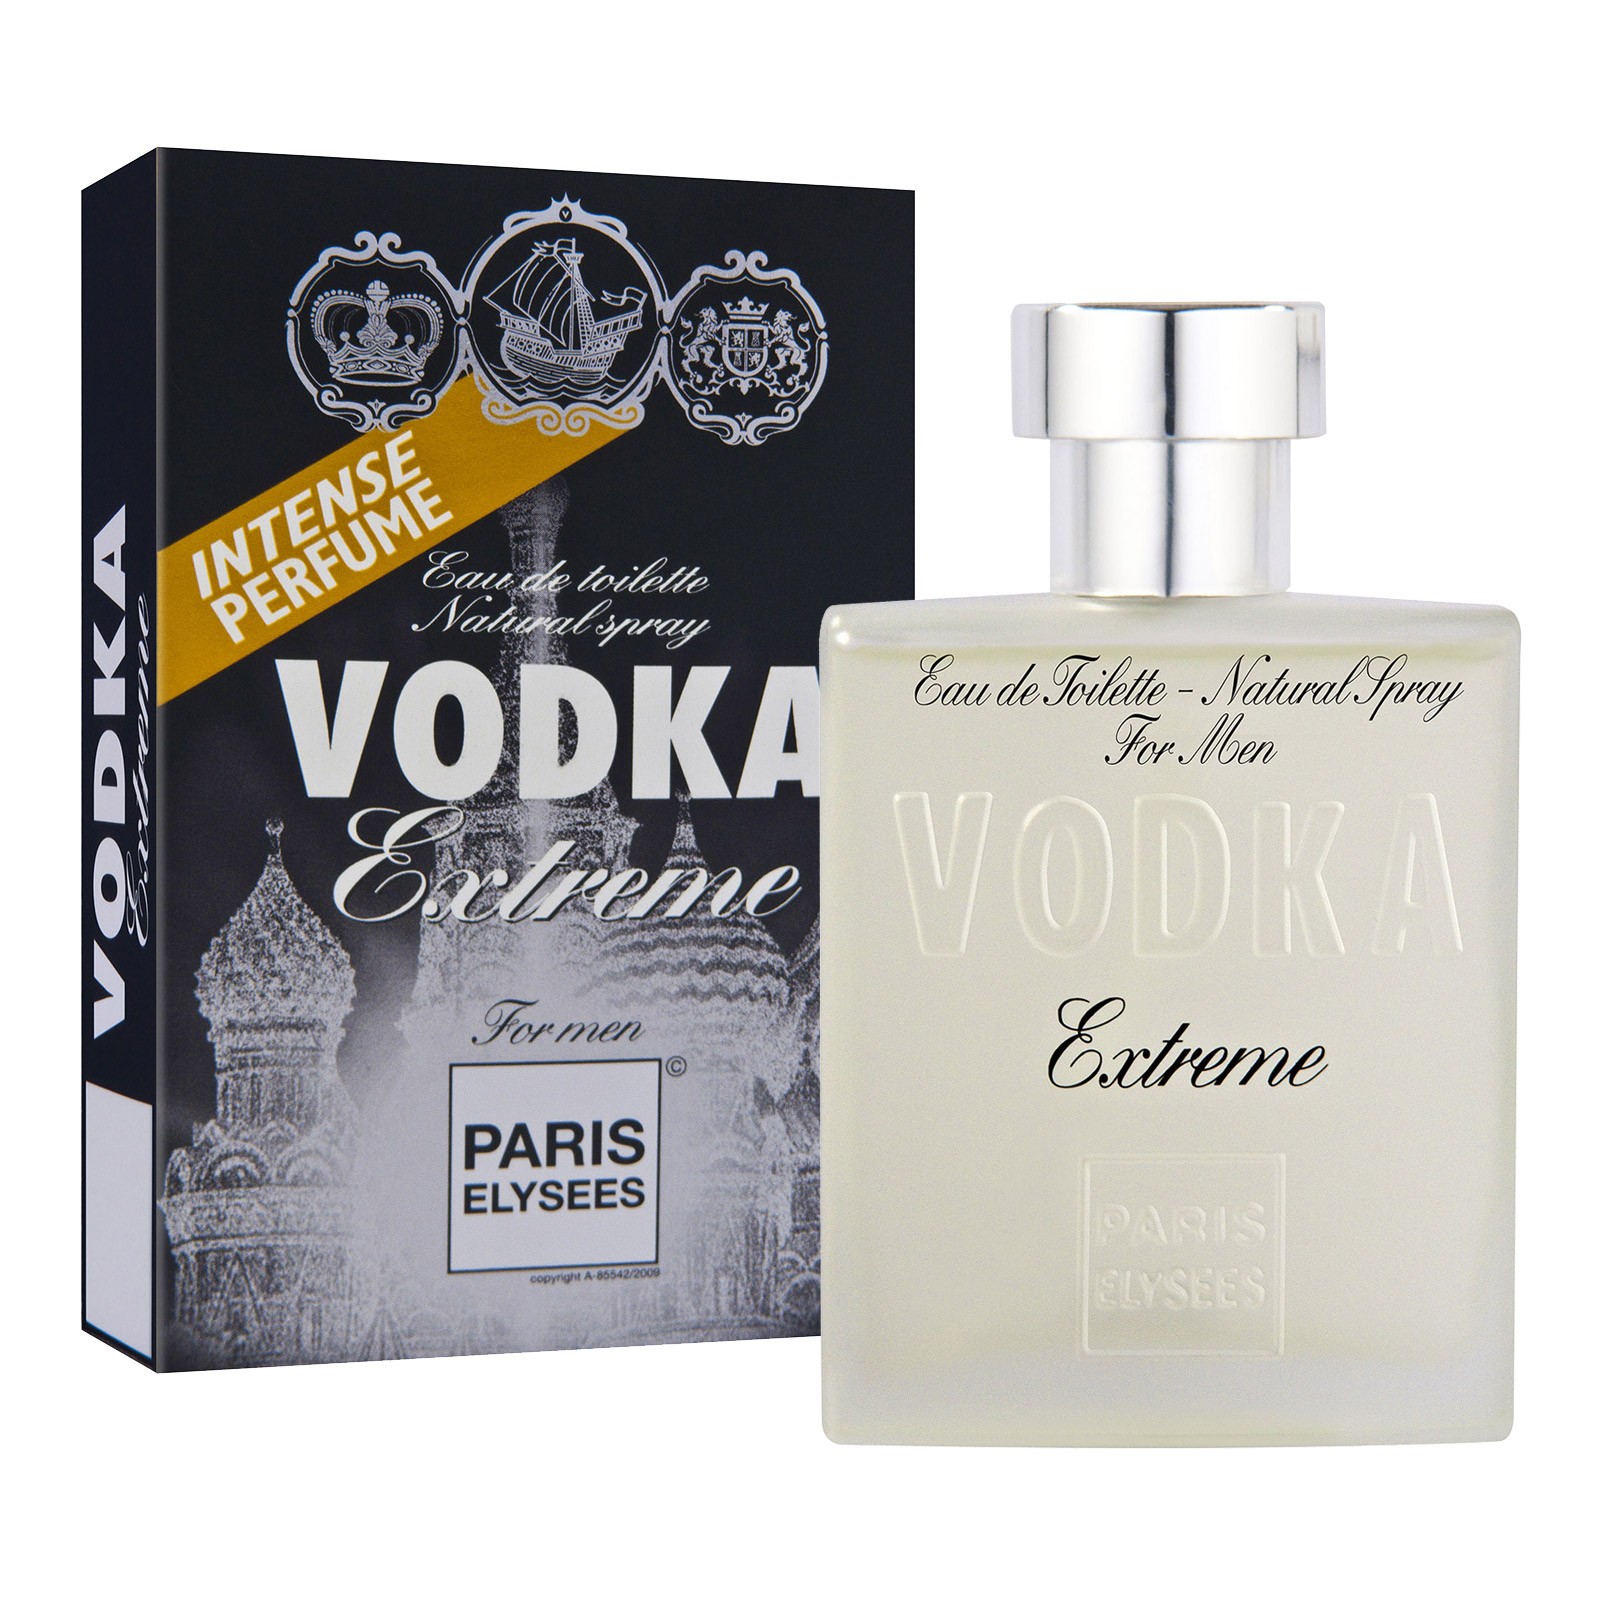 Vodka Extreme  Paris Elysees Parfums